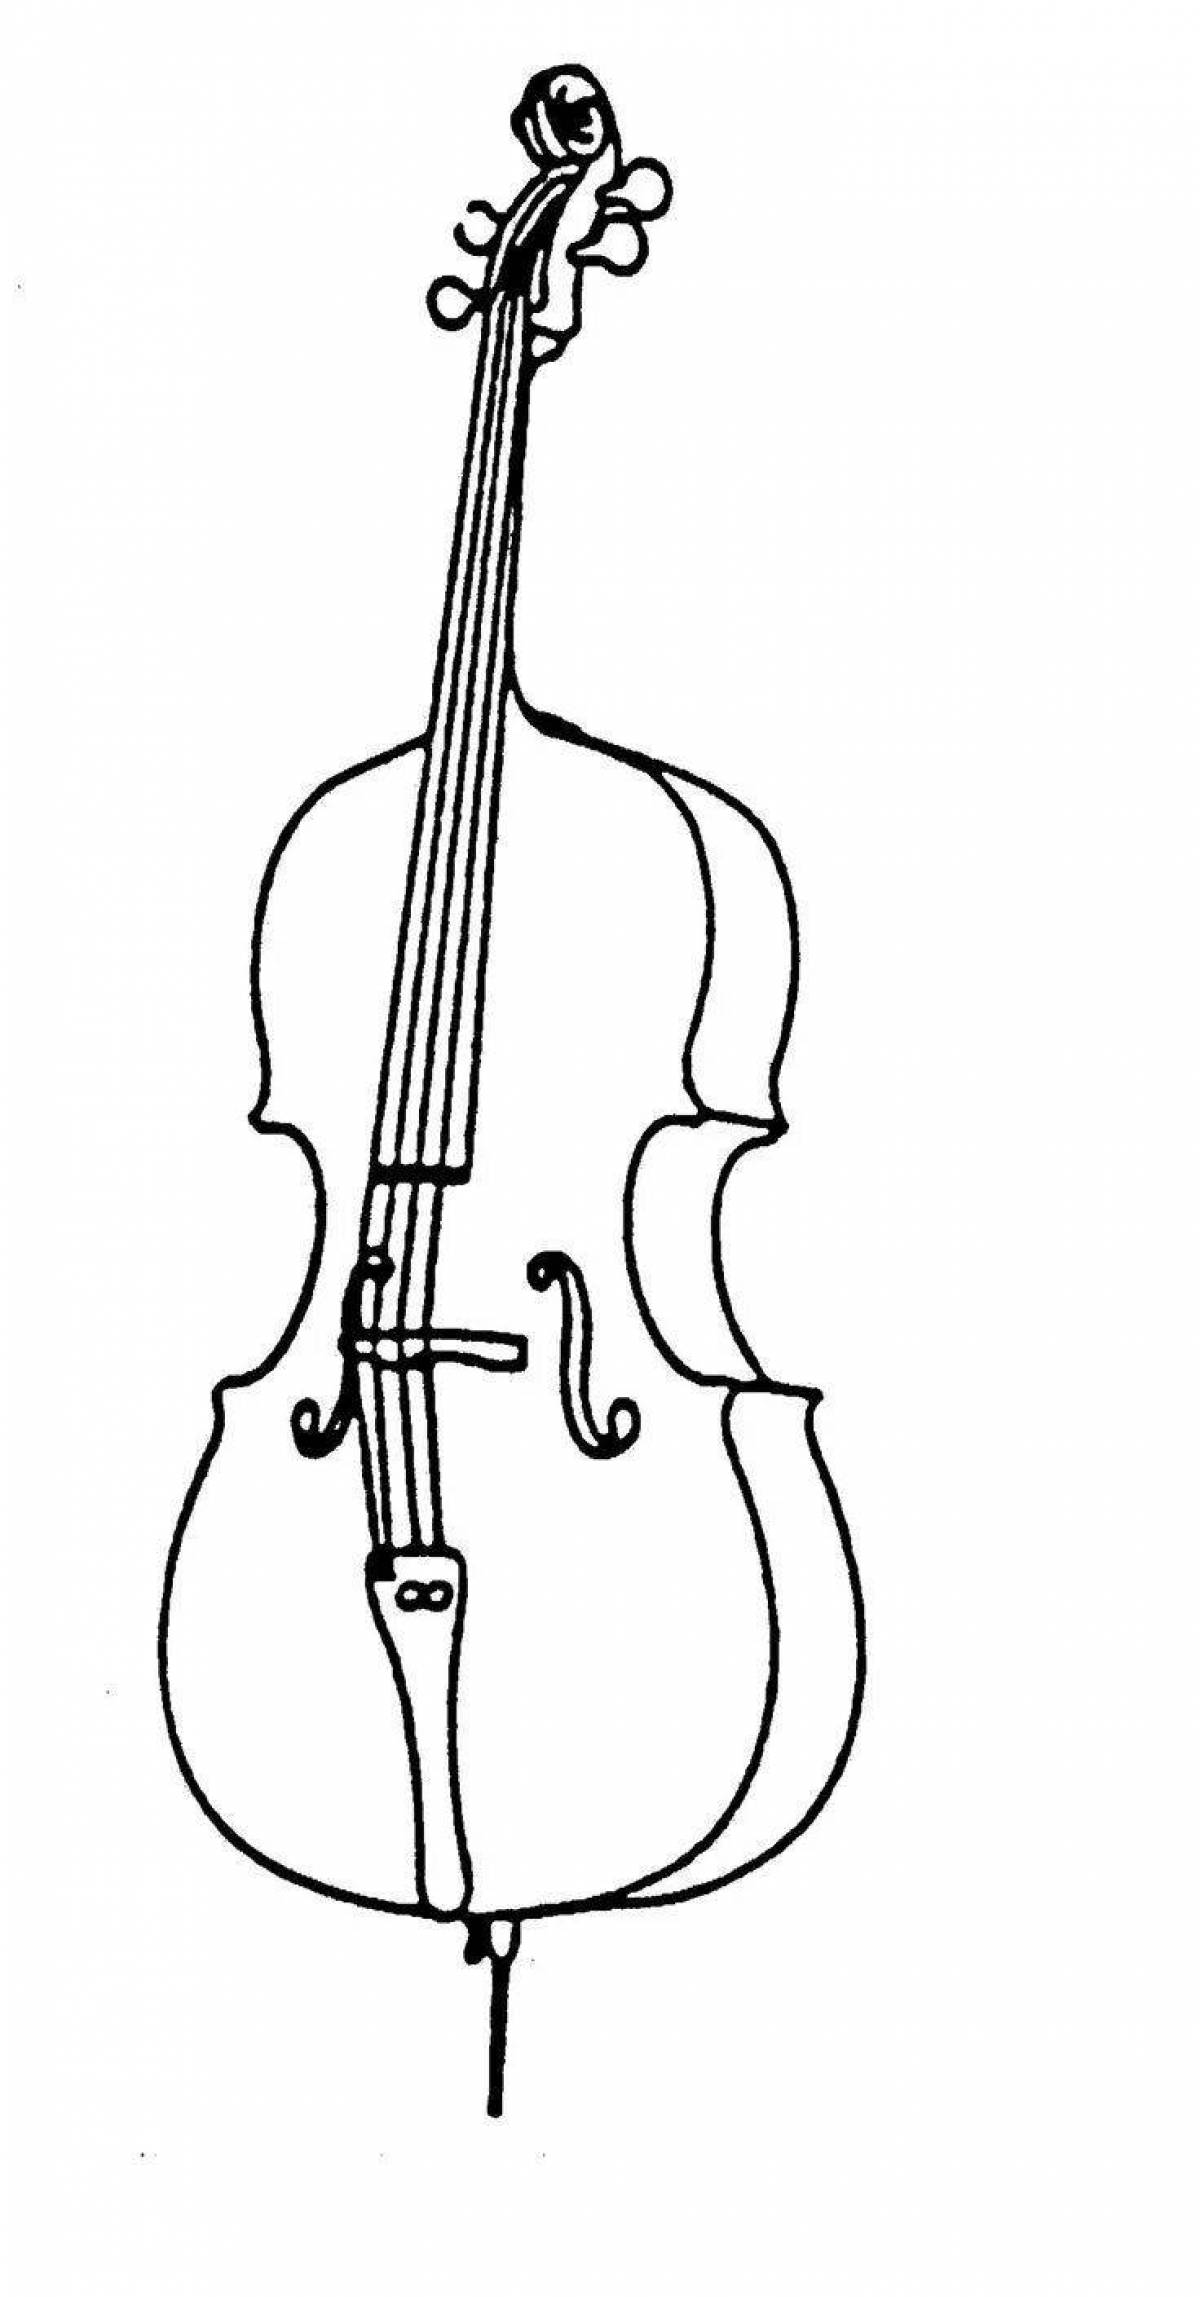 Peaceful violin and cello coloring